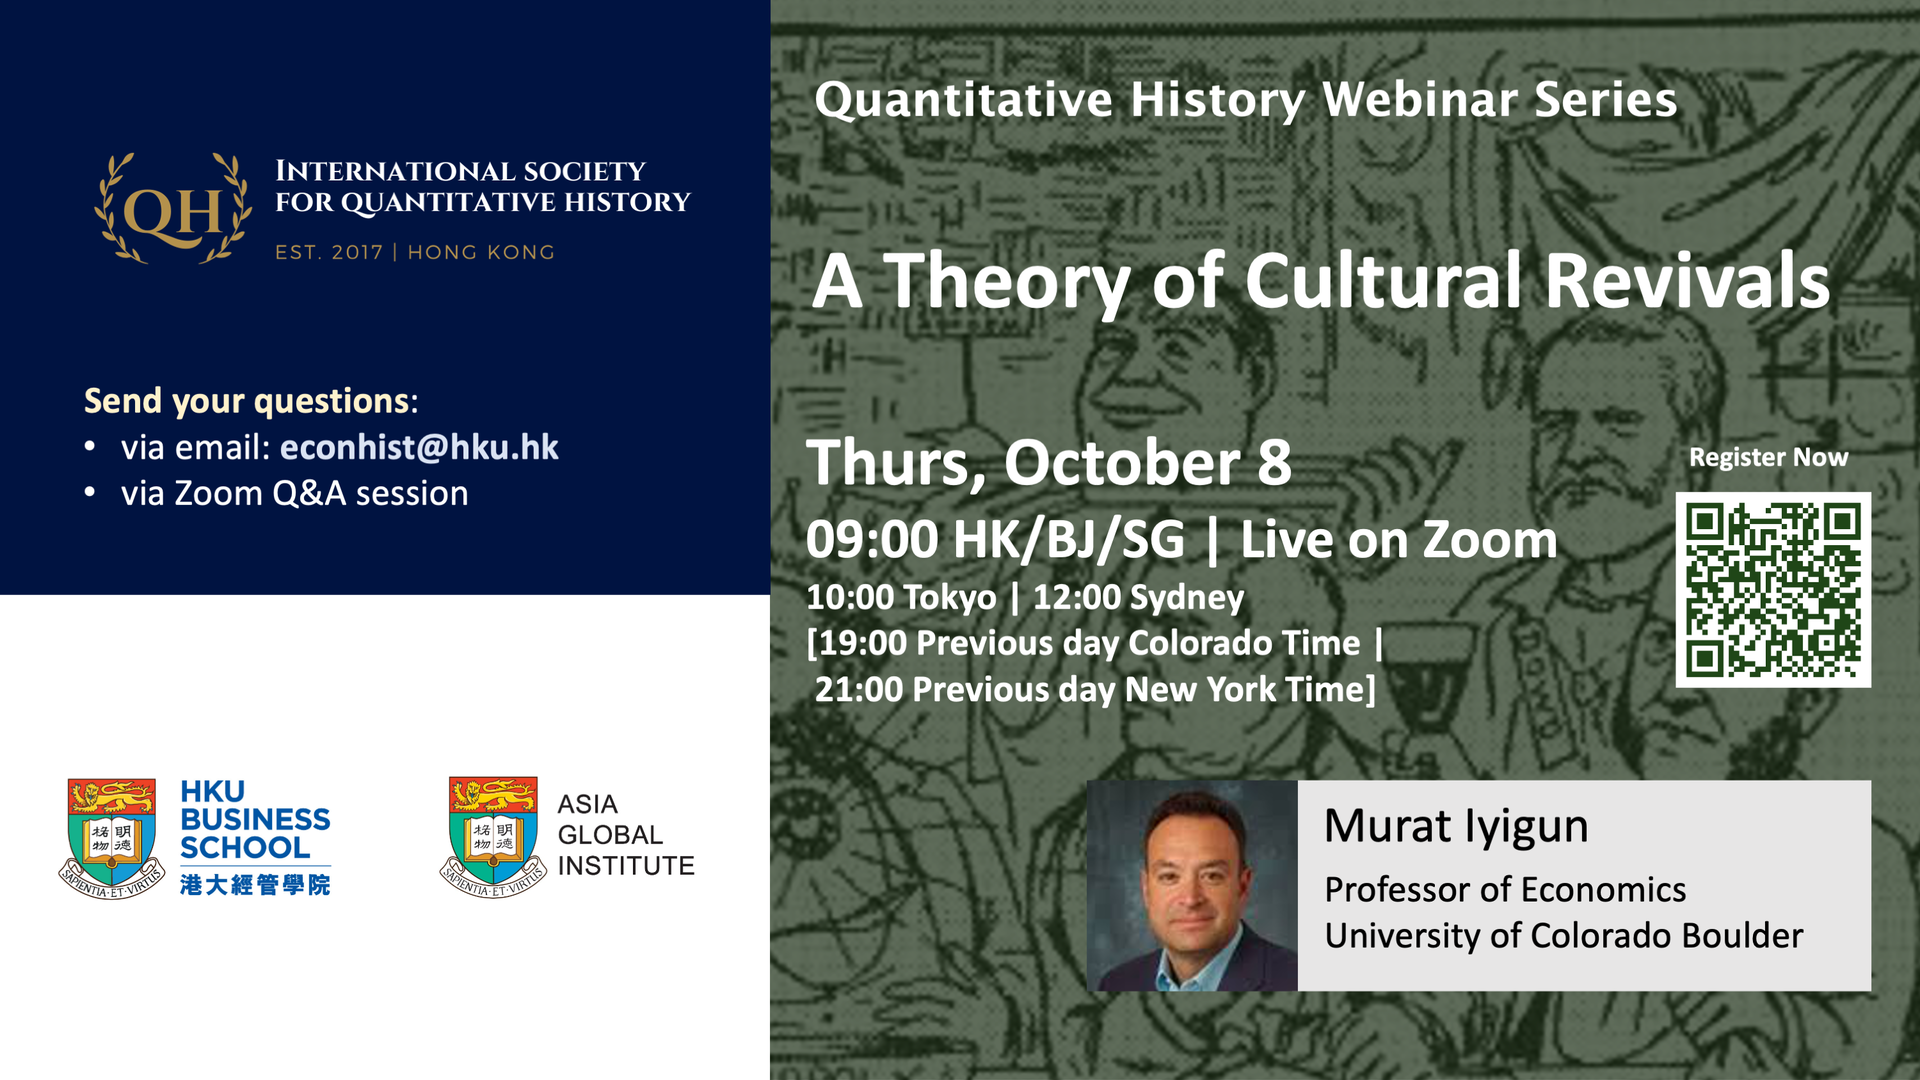 Quantitative History Webinar Series - A Theory of Cultural Revivals [Murat Iyigun, University of Colorado Boulder]